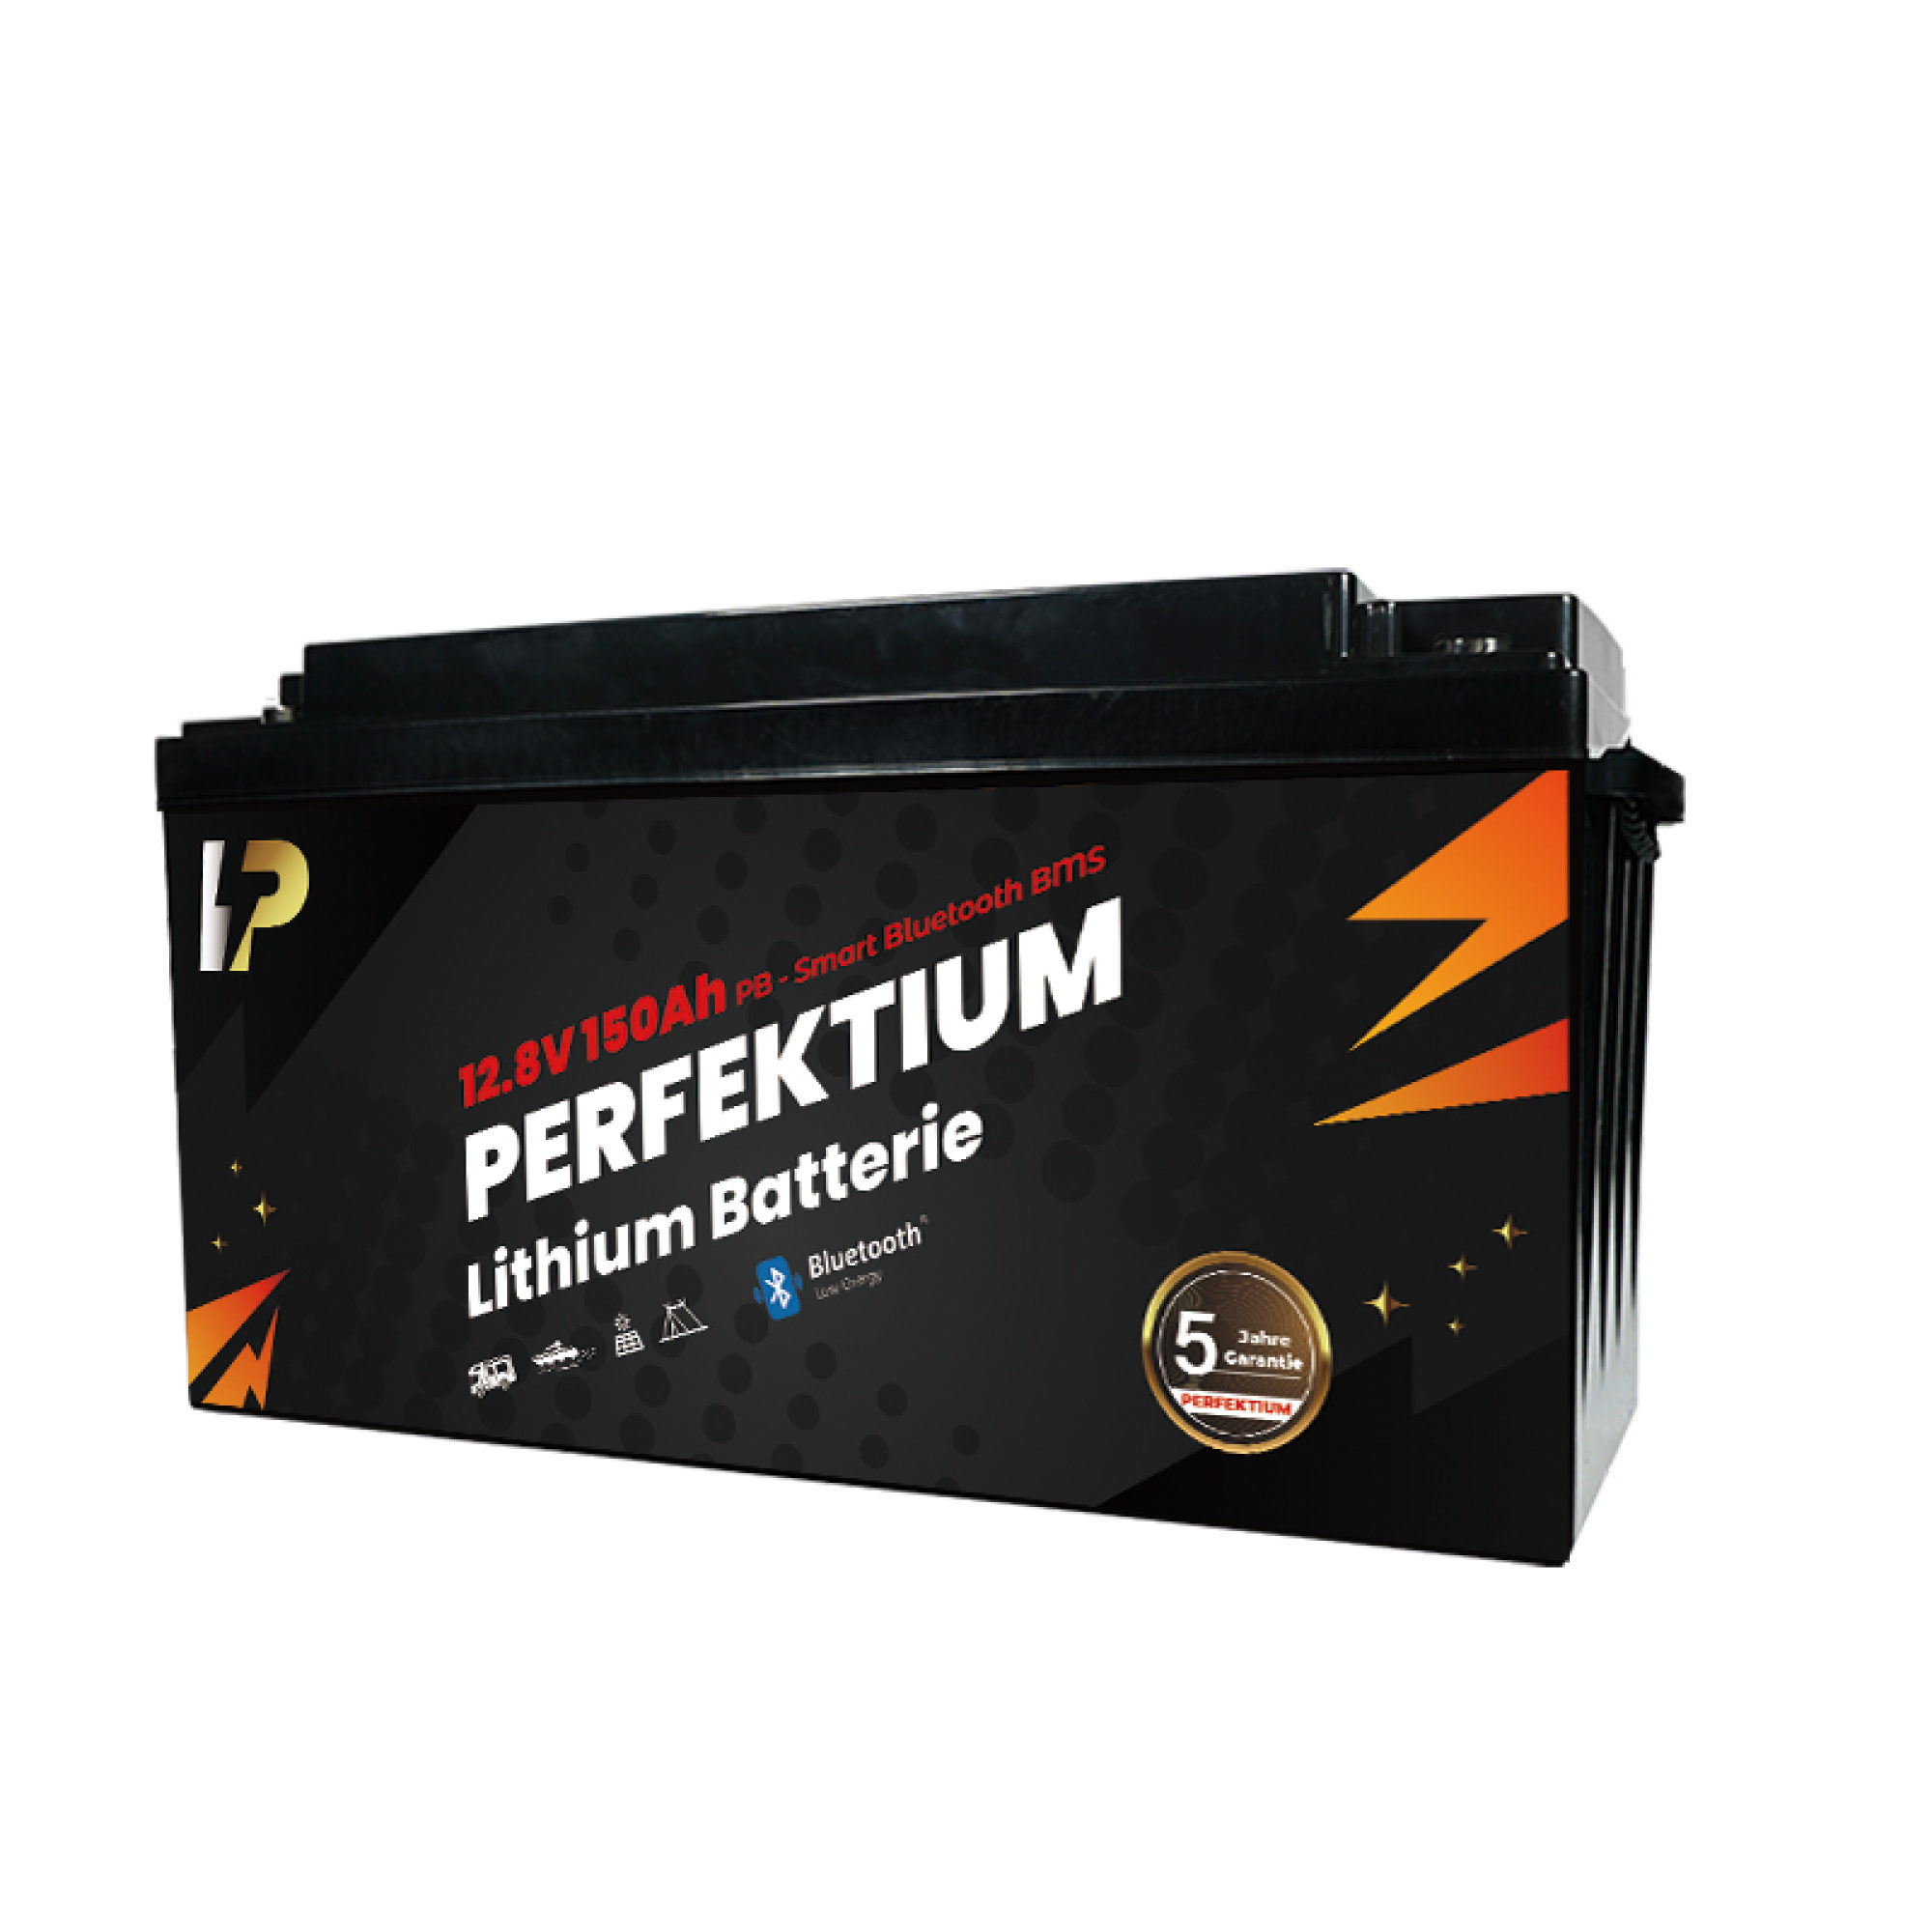 Perfektium LiFePO4 PB-12.8V 150Ah – Lithium Batterie Smart BMS mit Bluetooth – 6 Jahre Garantie